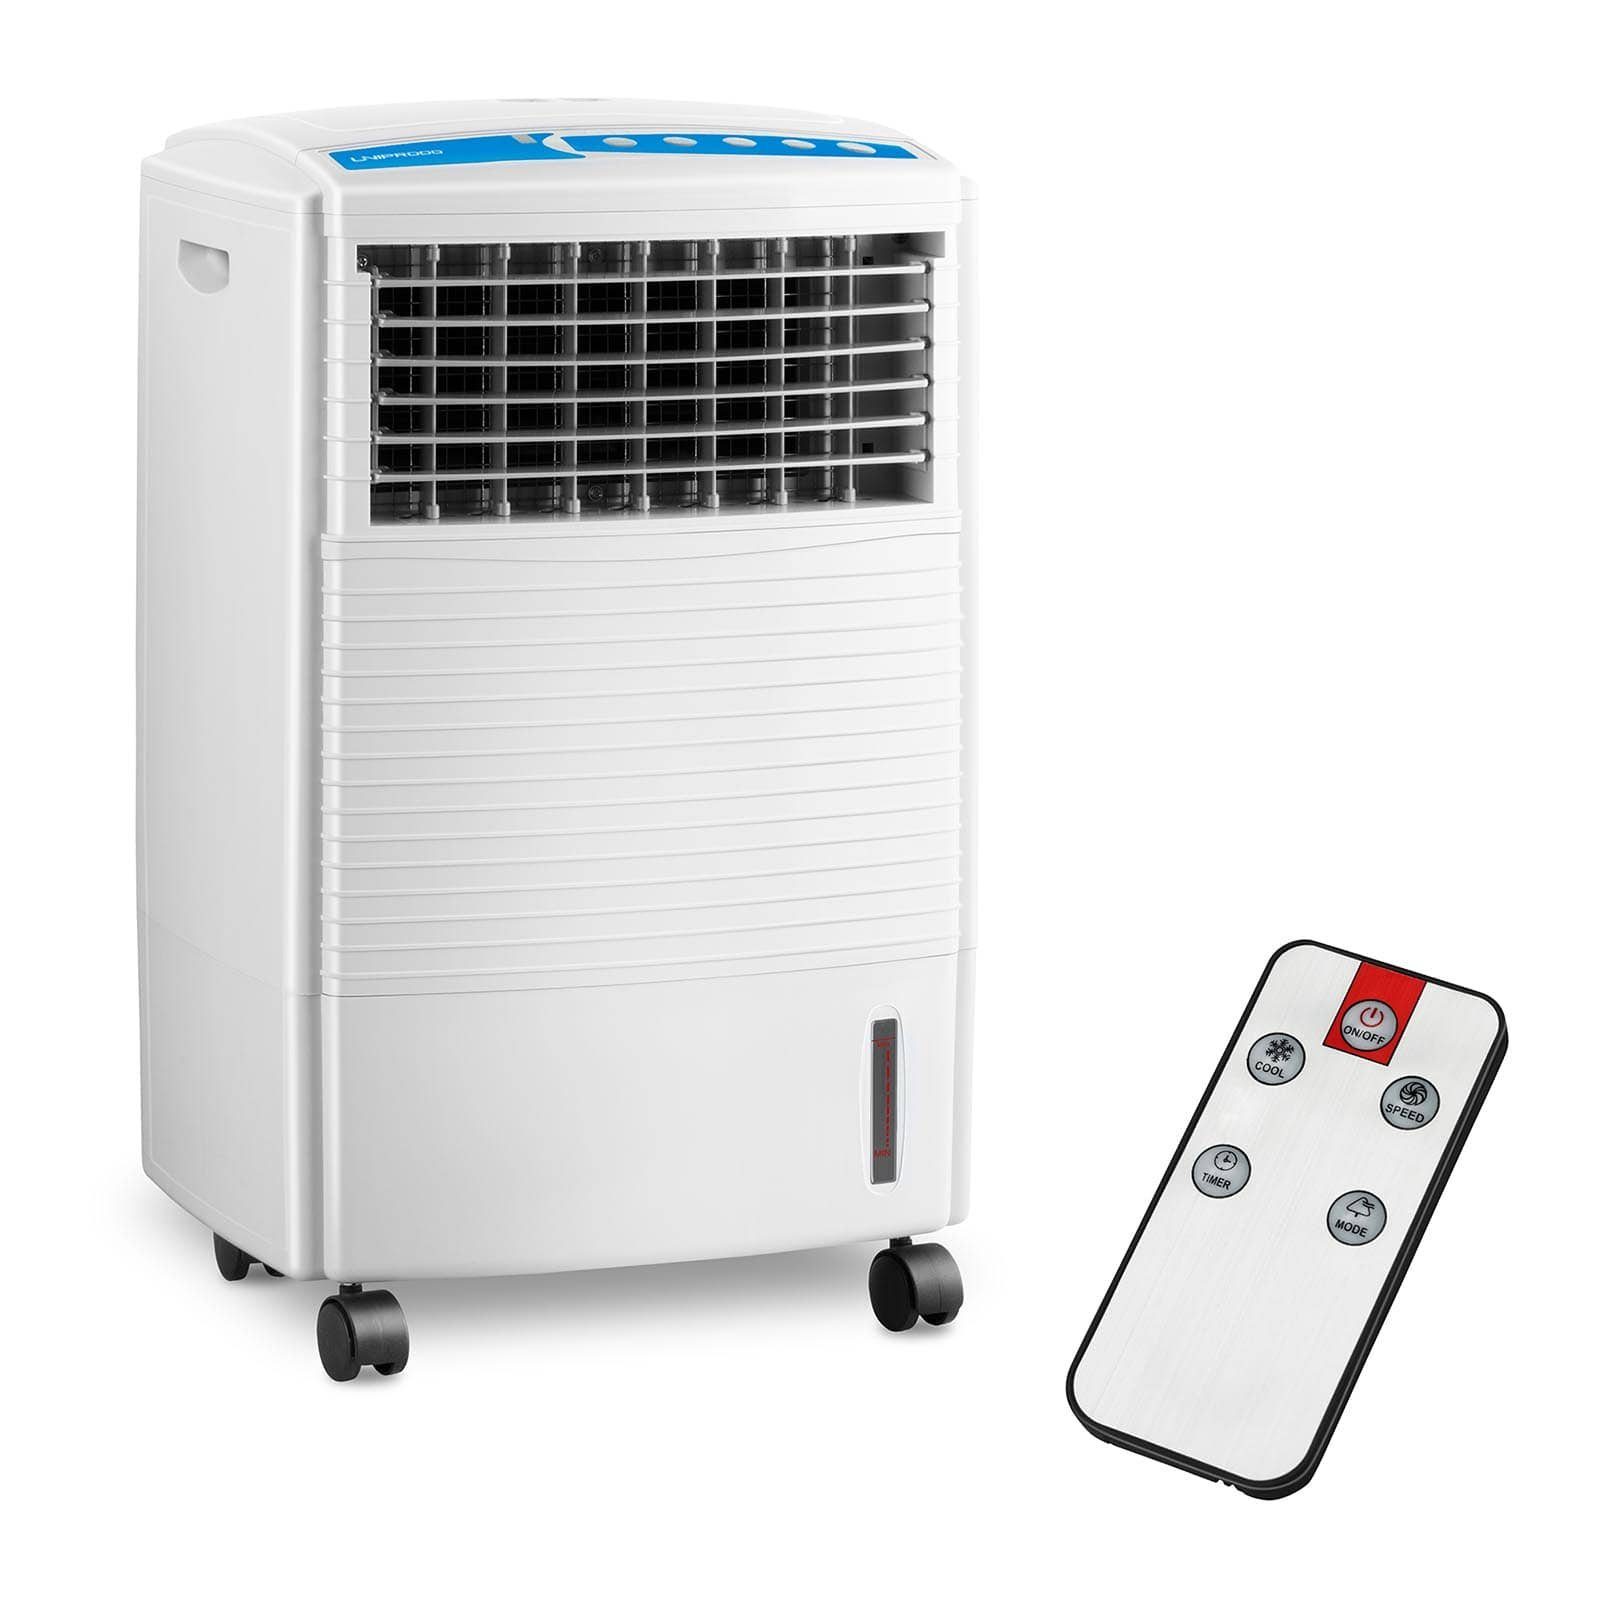 Uniprodo Ventilatorkombigerät Luftkühler Mobil Wassertank Klimagerät - 10 3 1 In Luftreiniger - L